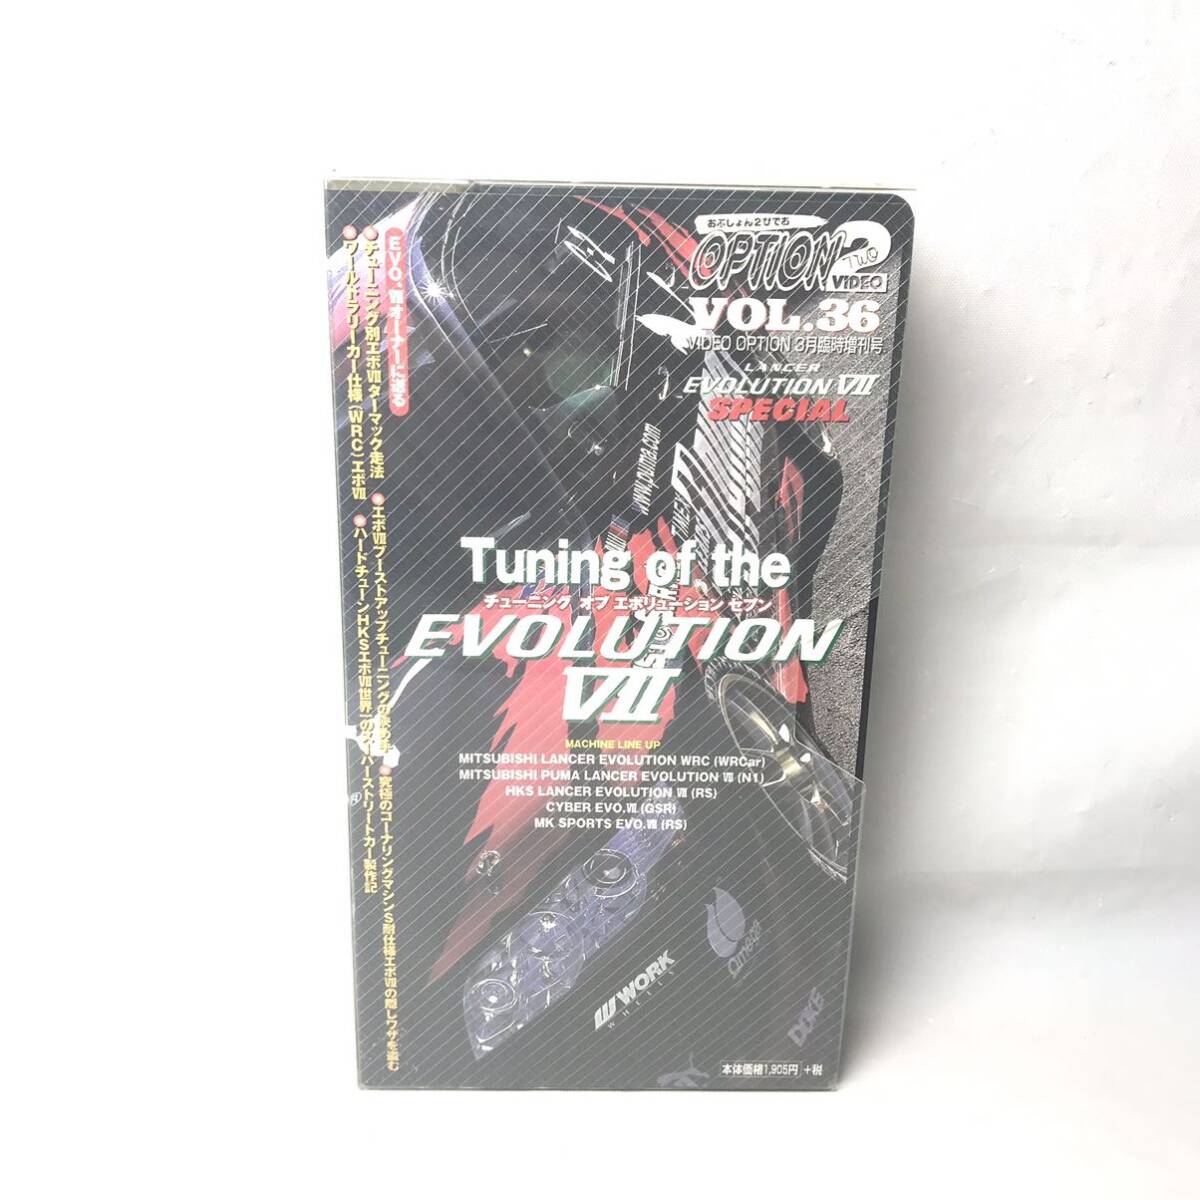 F04212 VHS ビデオテープ 販売専用品 OPTION2 VOL.36 EVOLUTION VⅡ SPECIAL チューニング オブ エボリューション セブン 70分 三栄書房_画像1